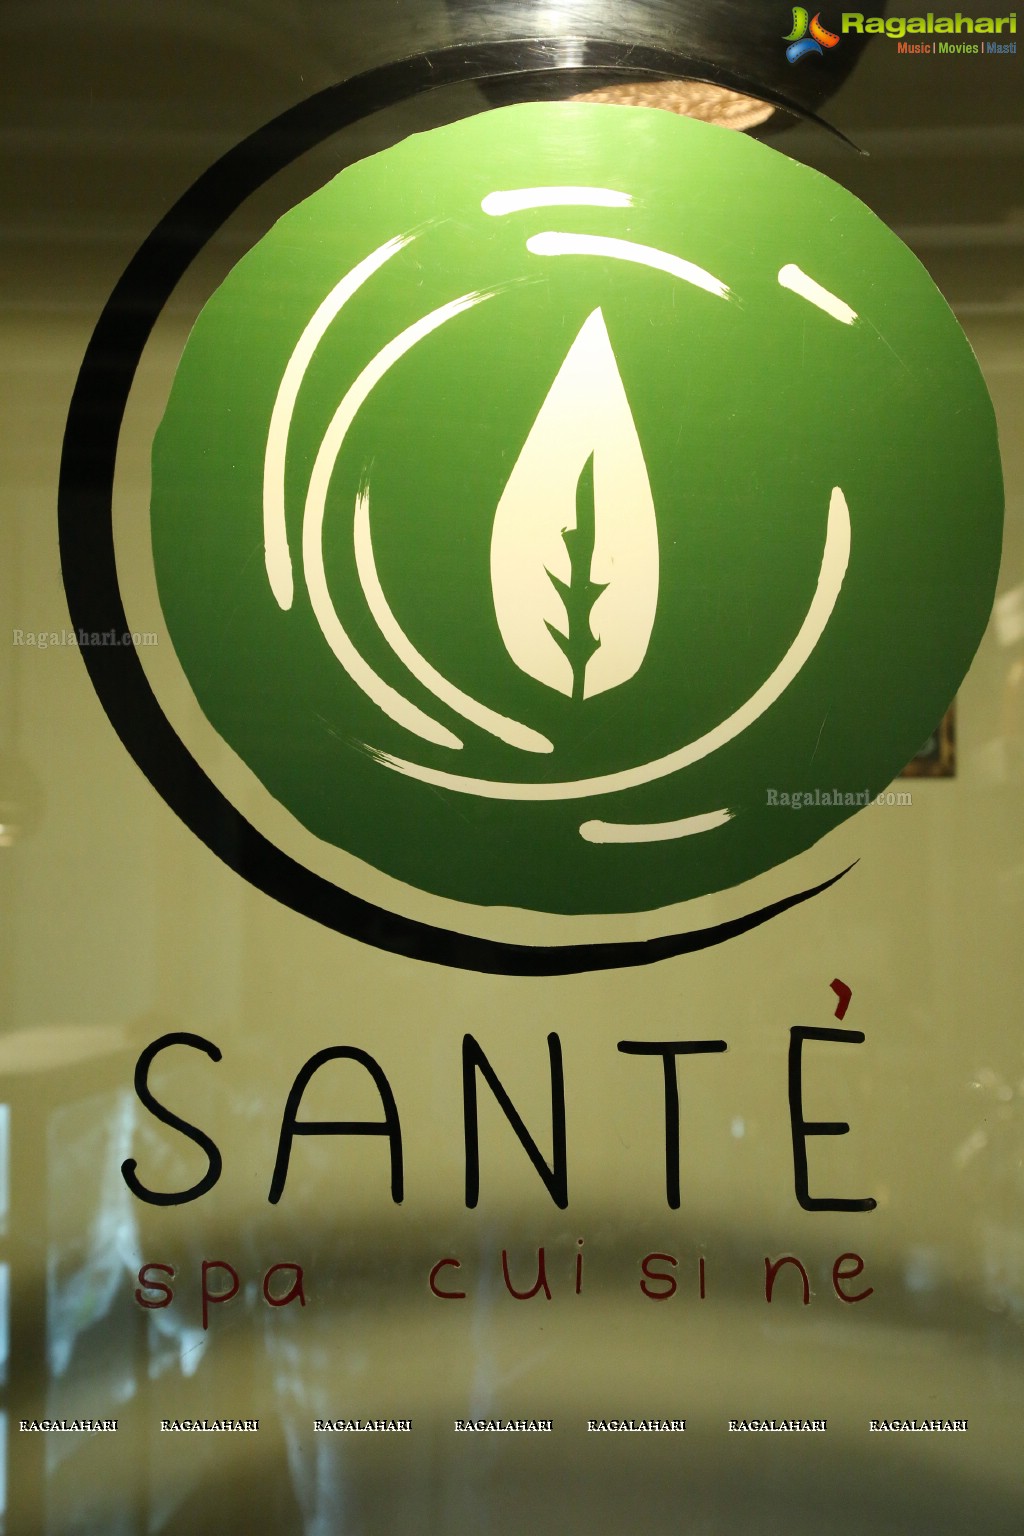 Grand Launch of Sante Spa Cuisine, Jubilee Hills